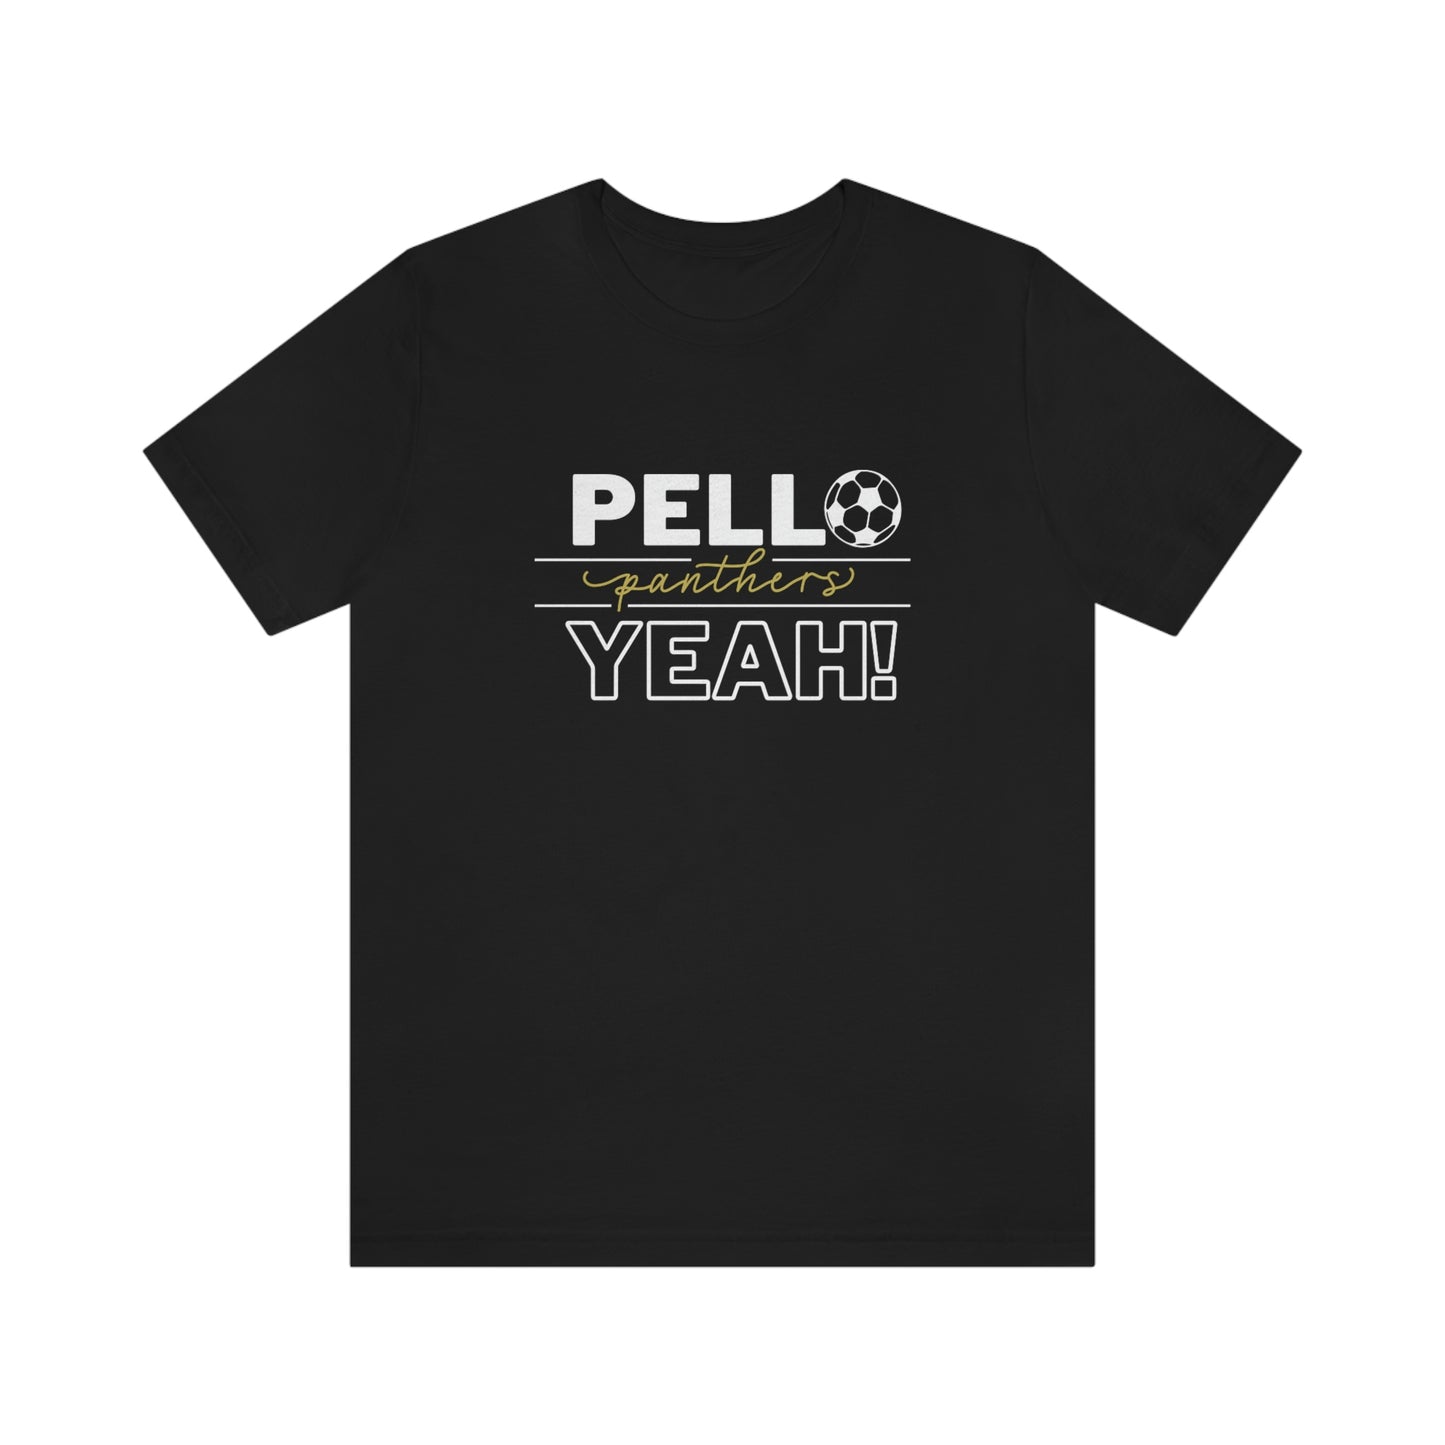 Pell Yeah Panthers - T-Shirt (Black)